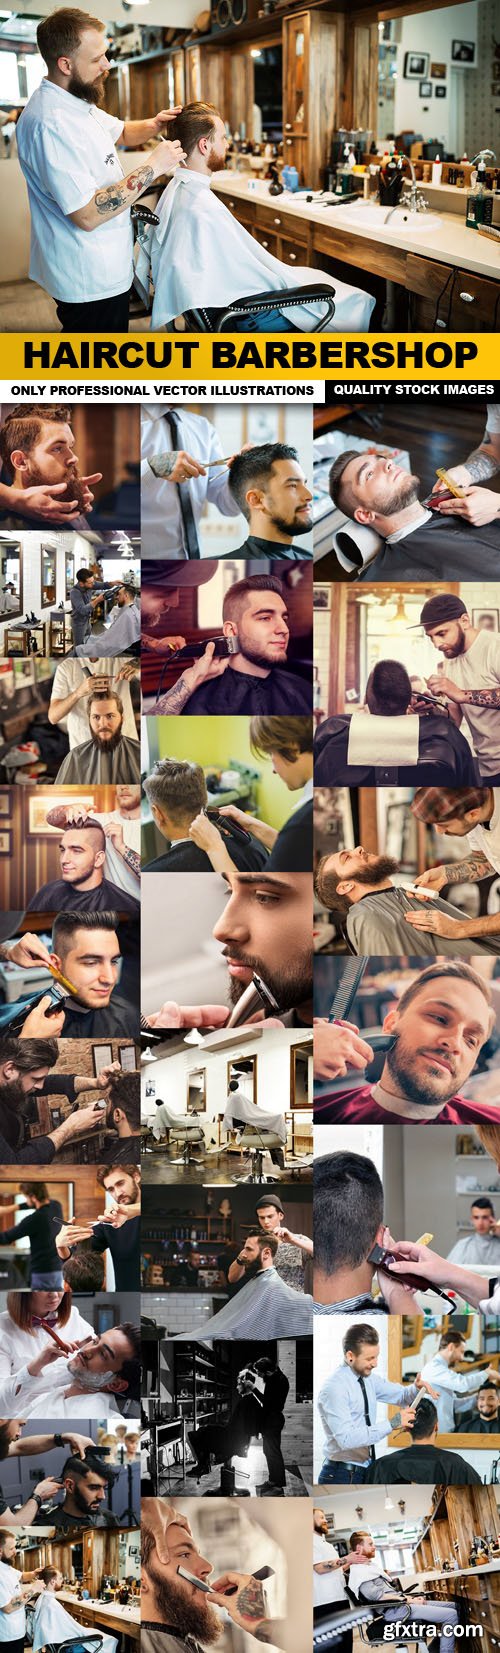 Haircut Barbershop - 25 HQ Images